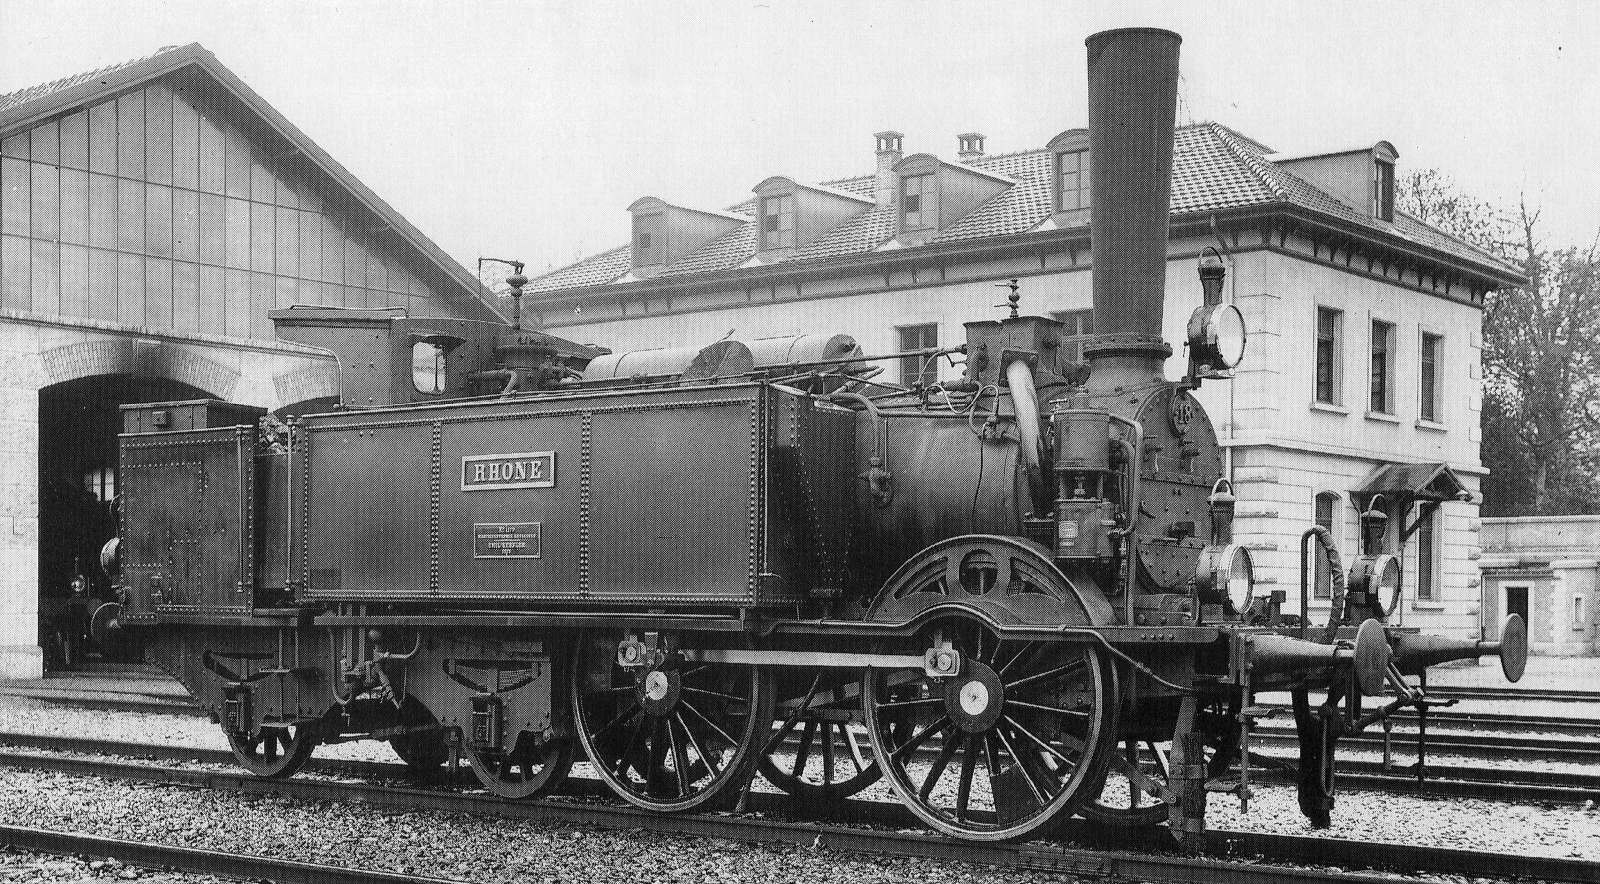 No. 18 “Rhone” in Basel depot